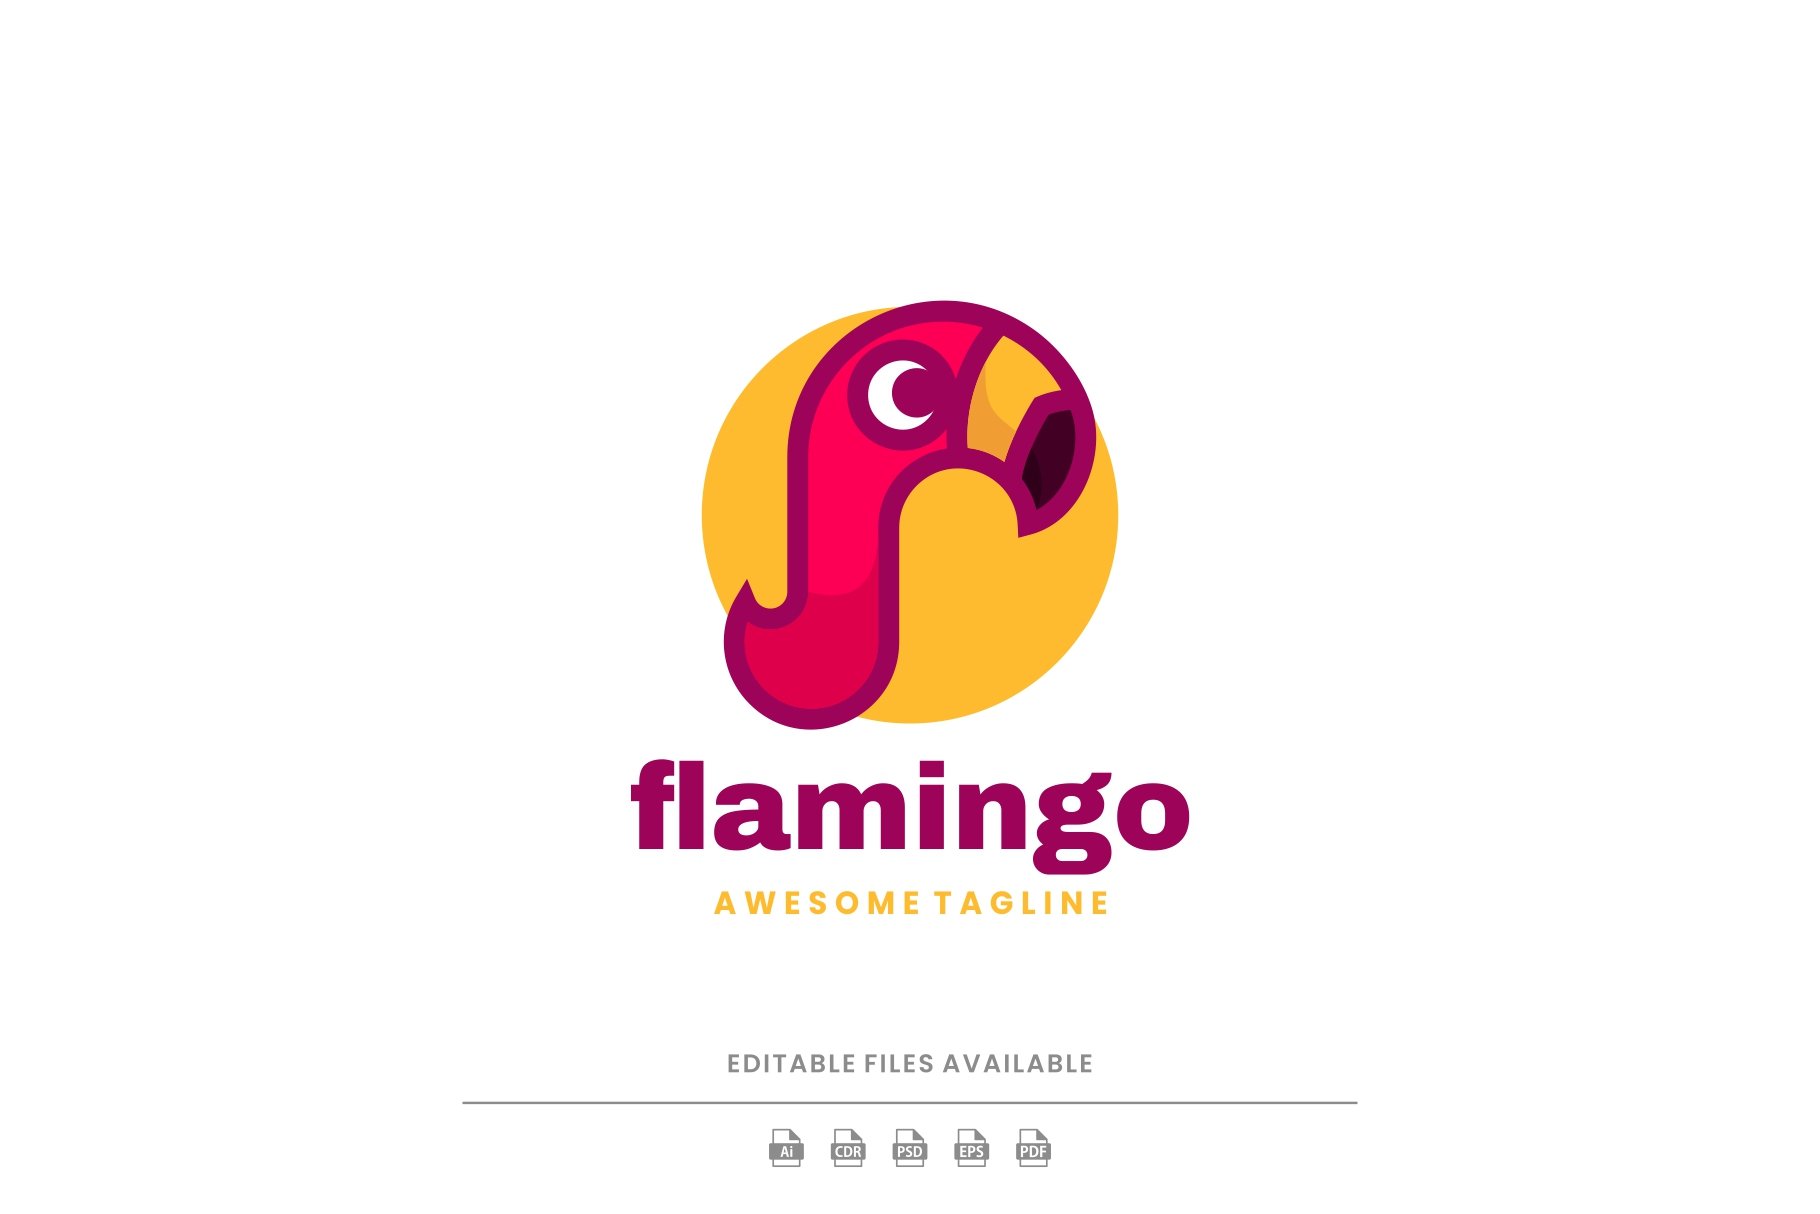 Flamingo Simple Mascot Logo cover image.